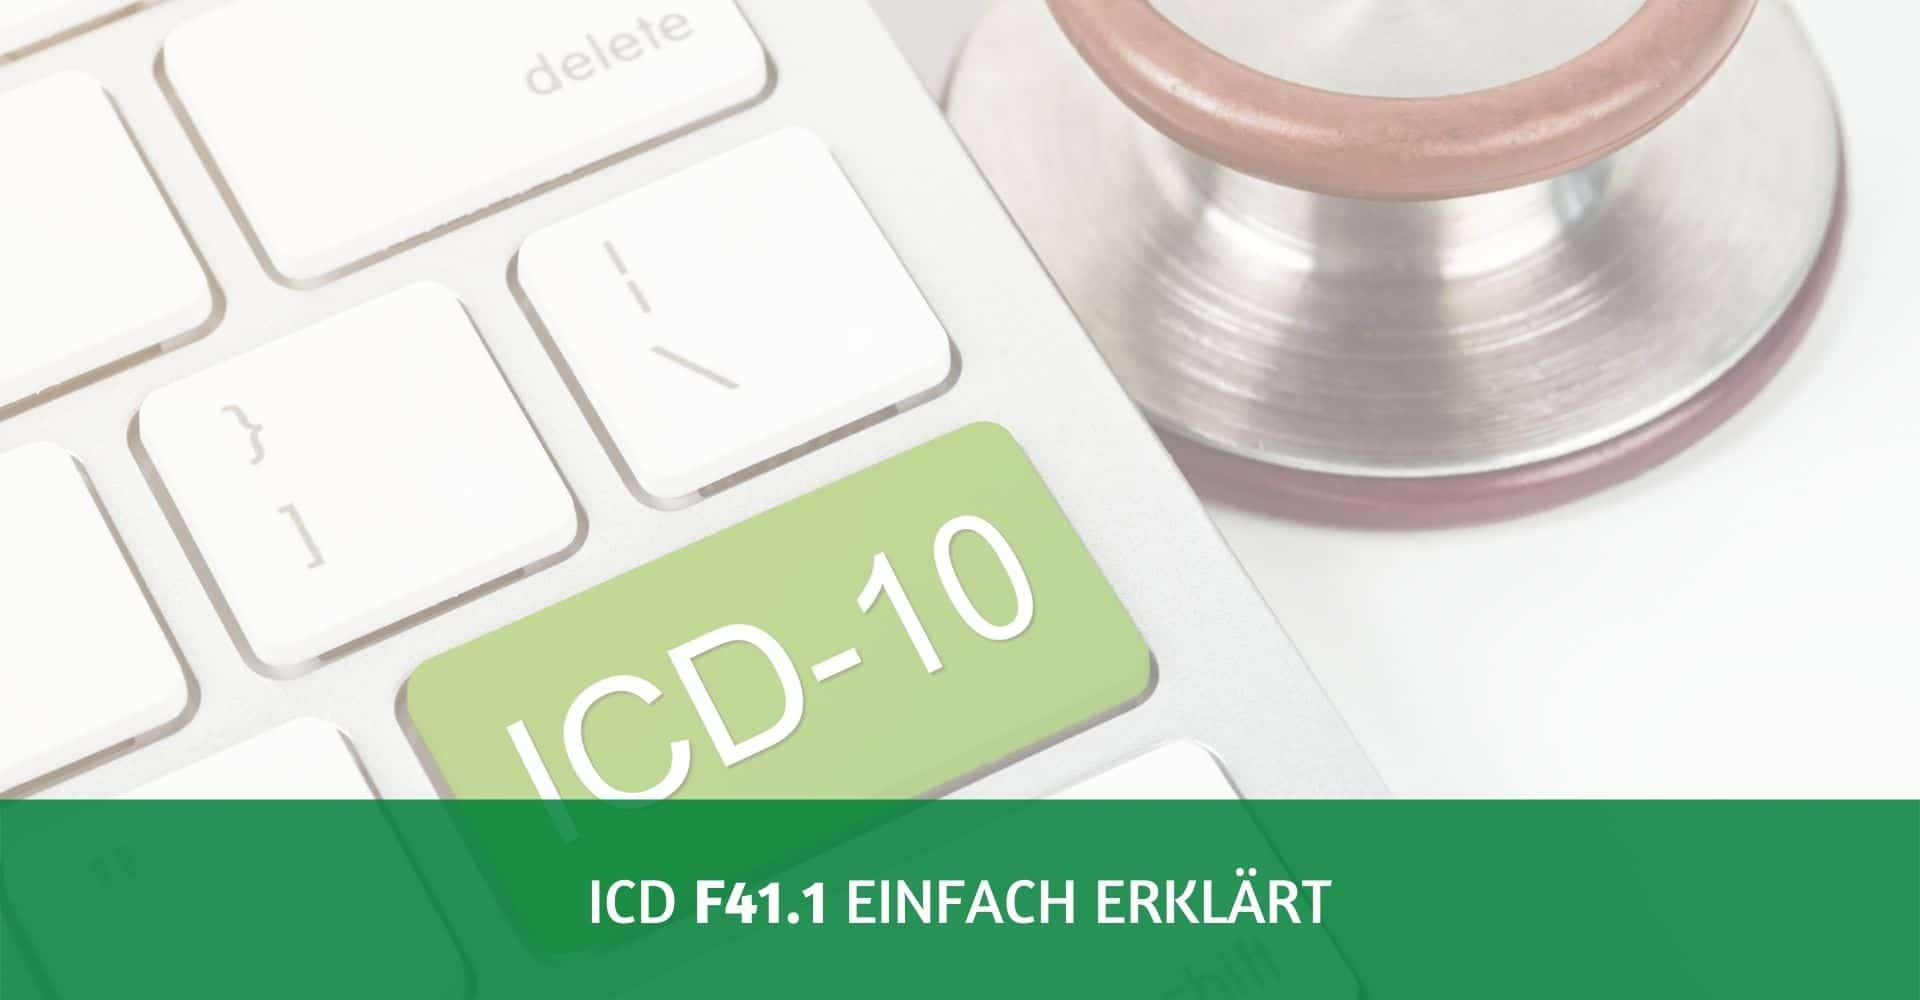 ICD F41.1